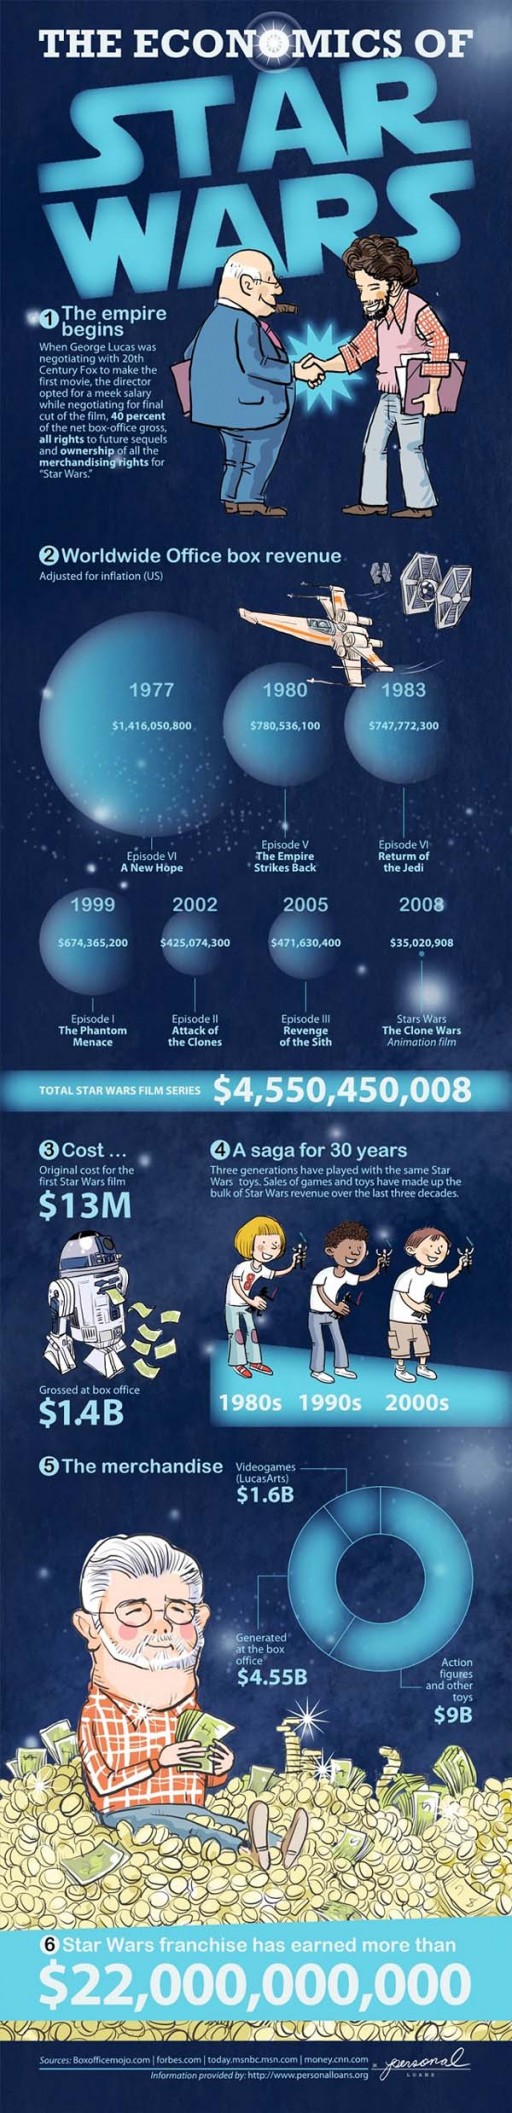 Star-Wars-Franchise-Economics-Infographic-1